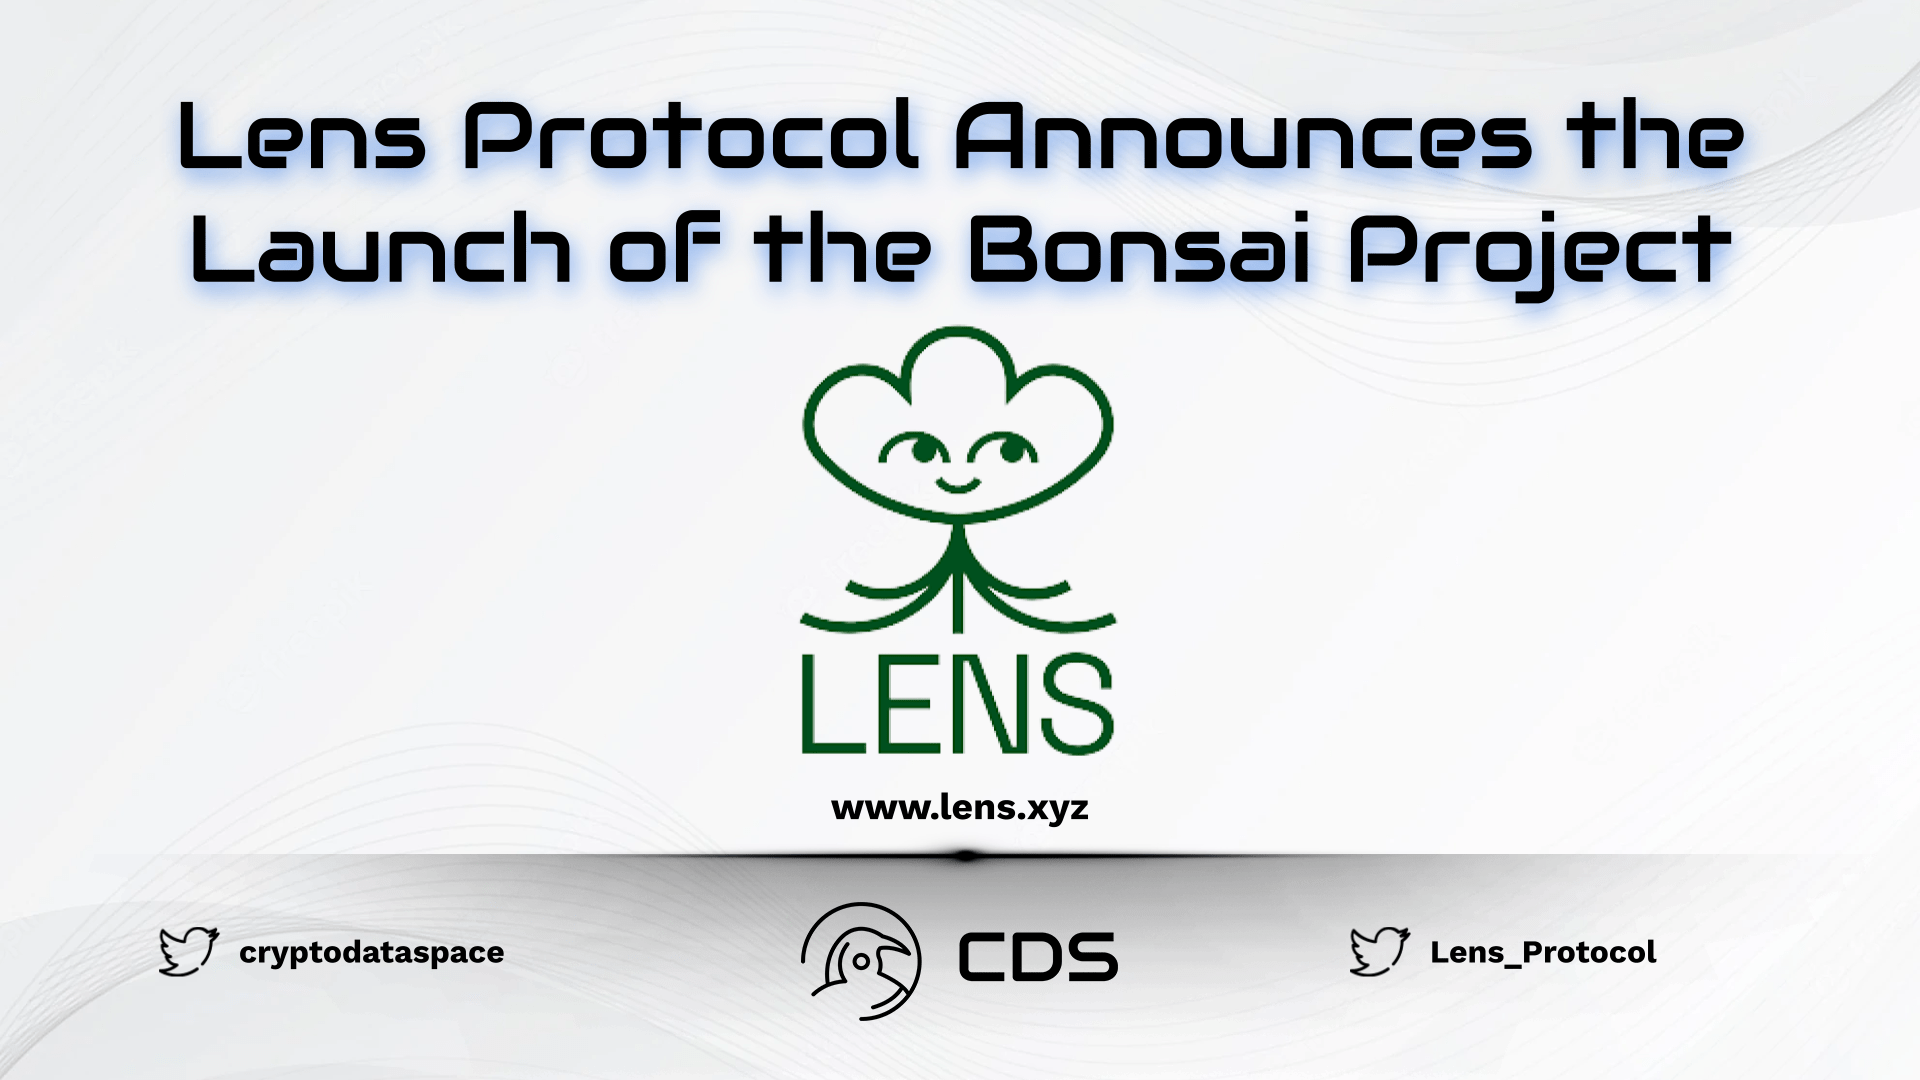 Lens Protocol Announces the Launch of the Bonsai Project